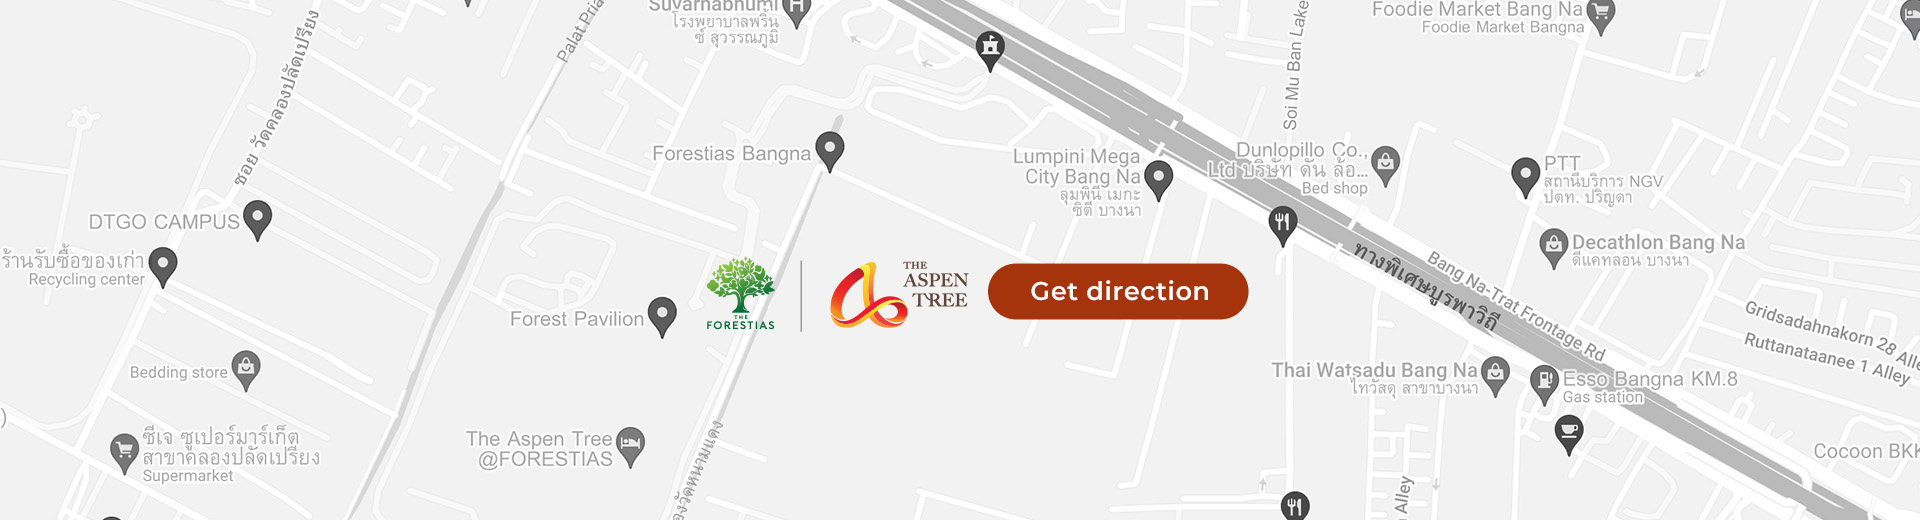 The Aspen Tree map_website